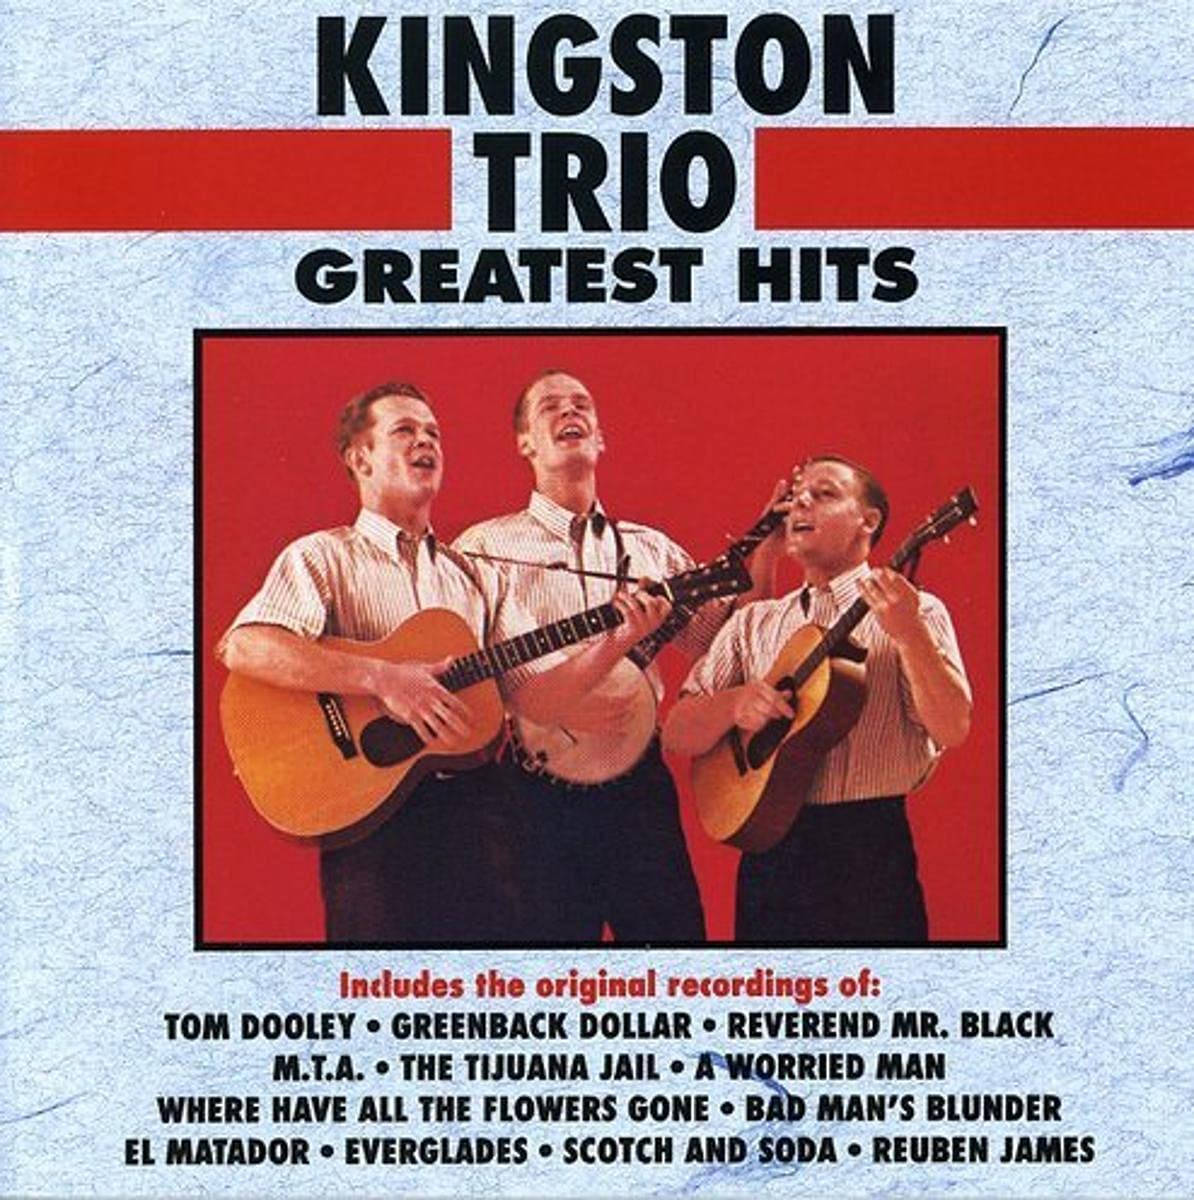 Kingston Trio's Greatest Hits Album Cover Wallpaper